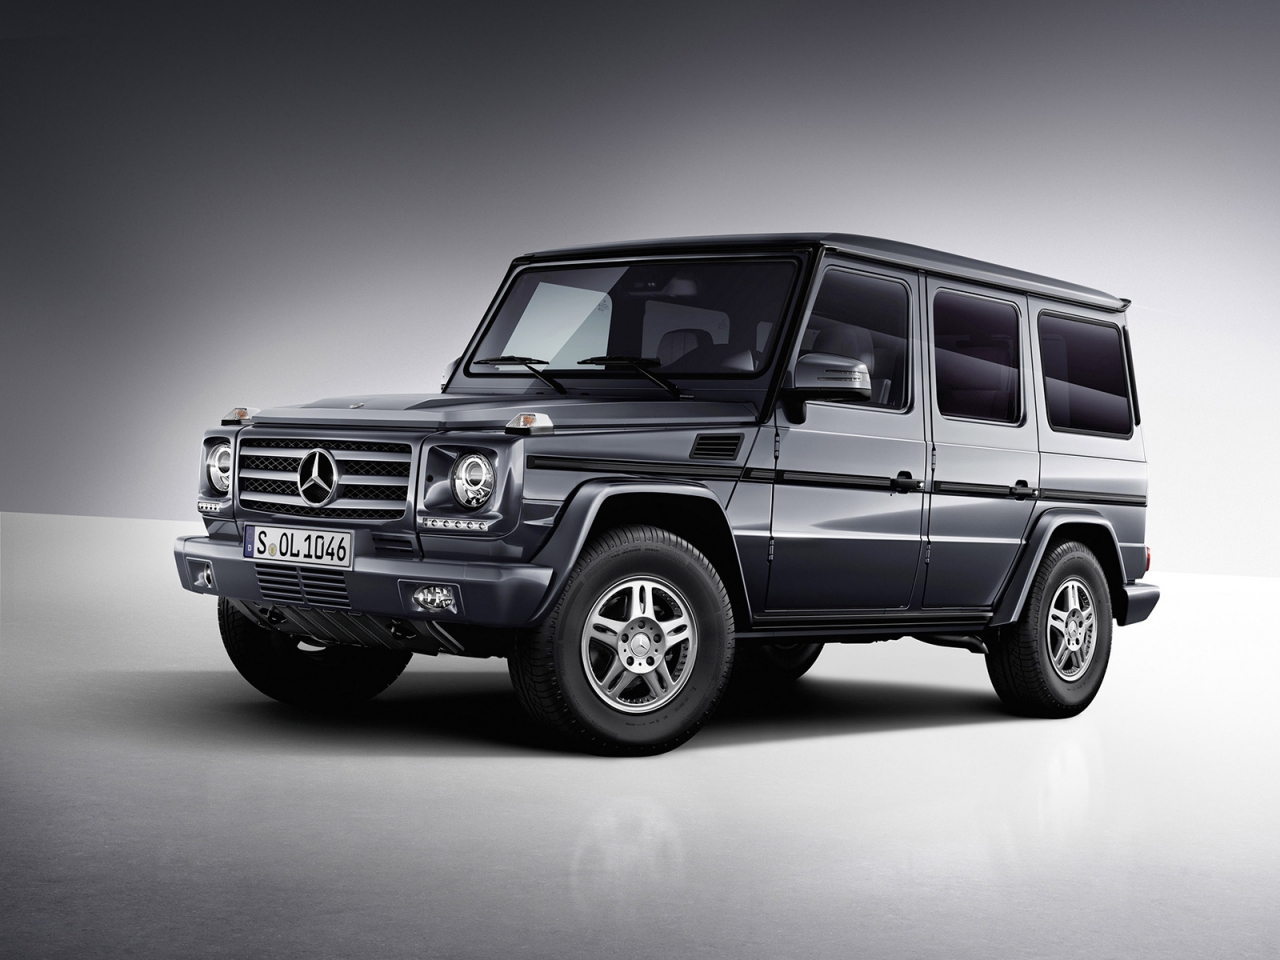 Mercedes Benz G Class Studio 2013 for 1280 x 960 resolution